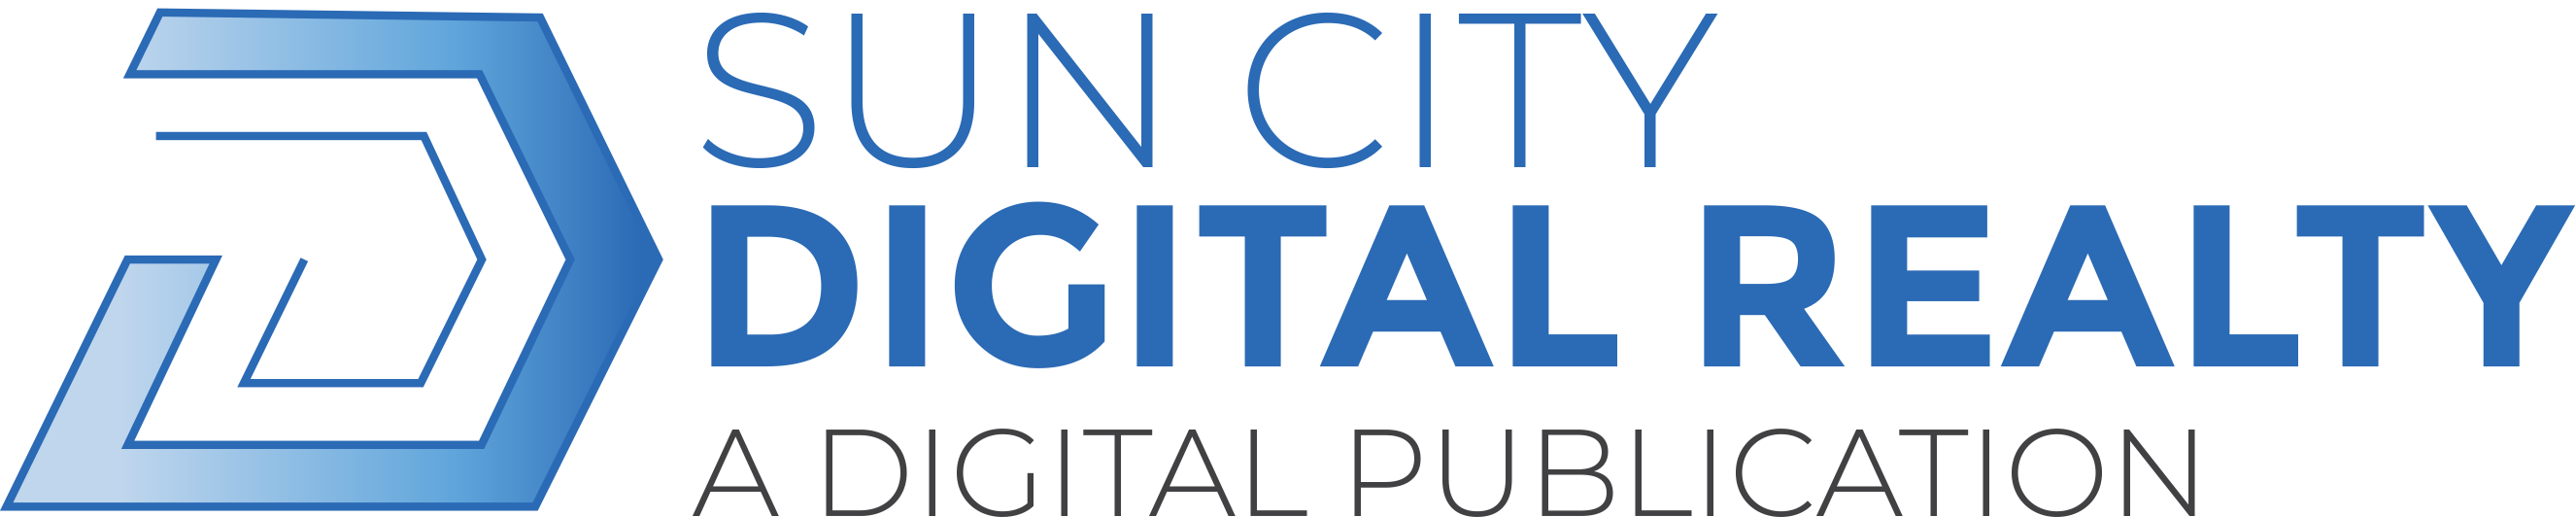 Sun City Digital Realty Logo